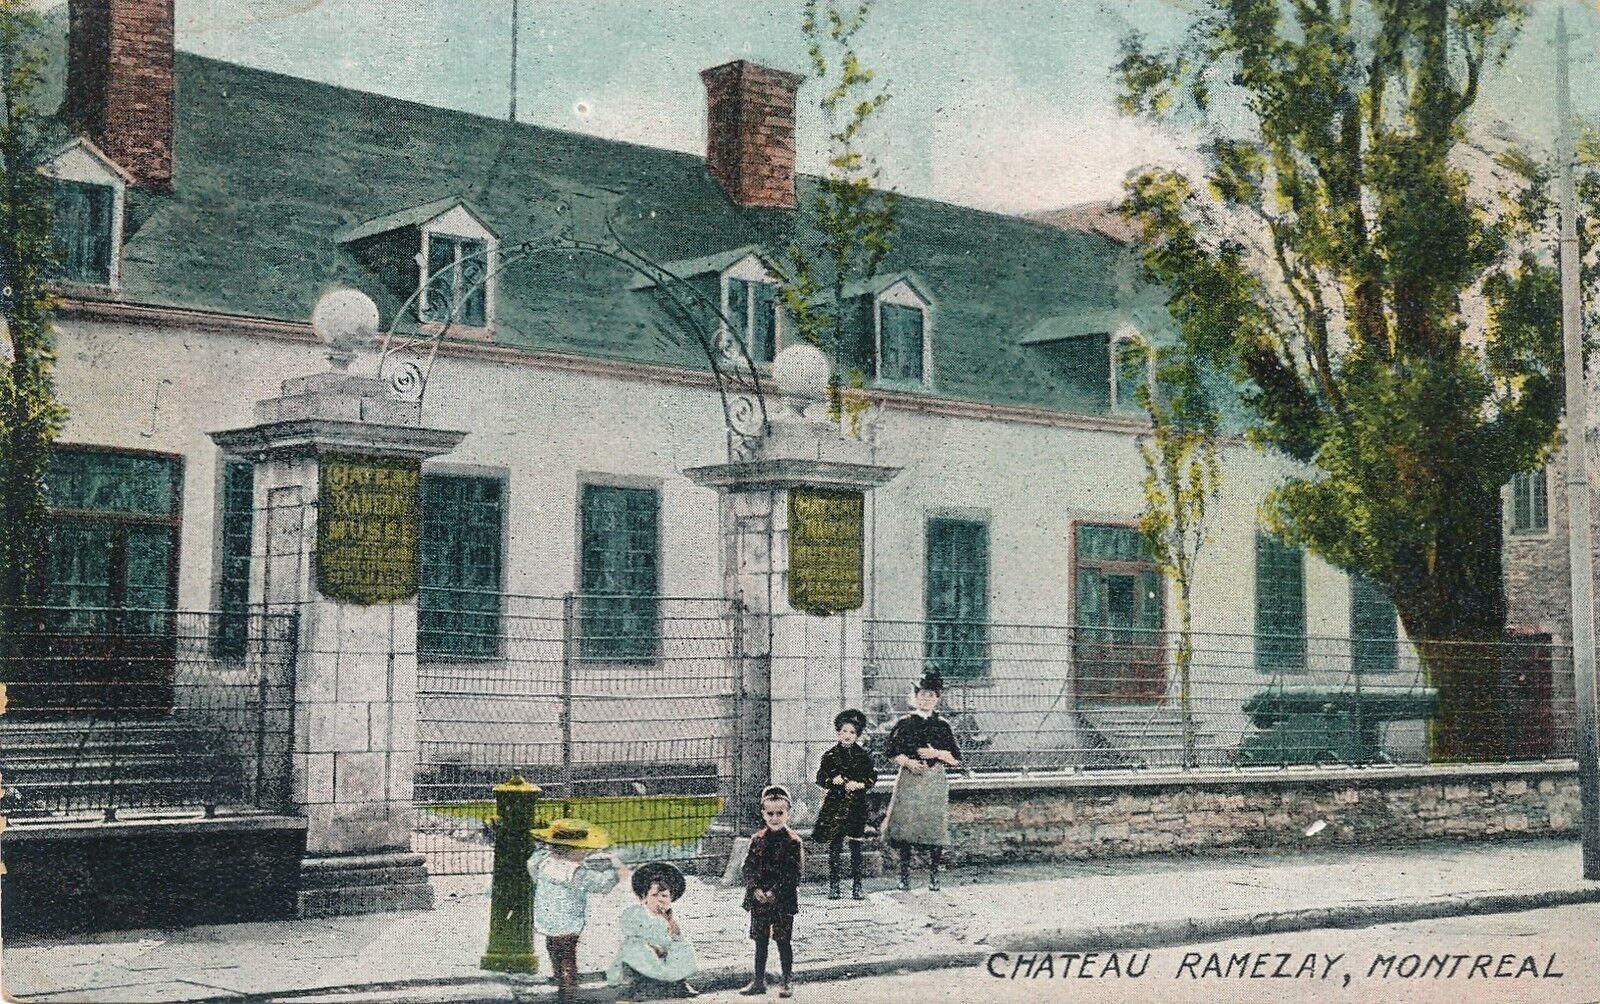 MONTREAL QC – Chateau Ramezay